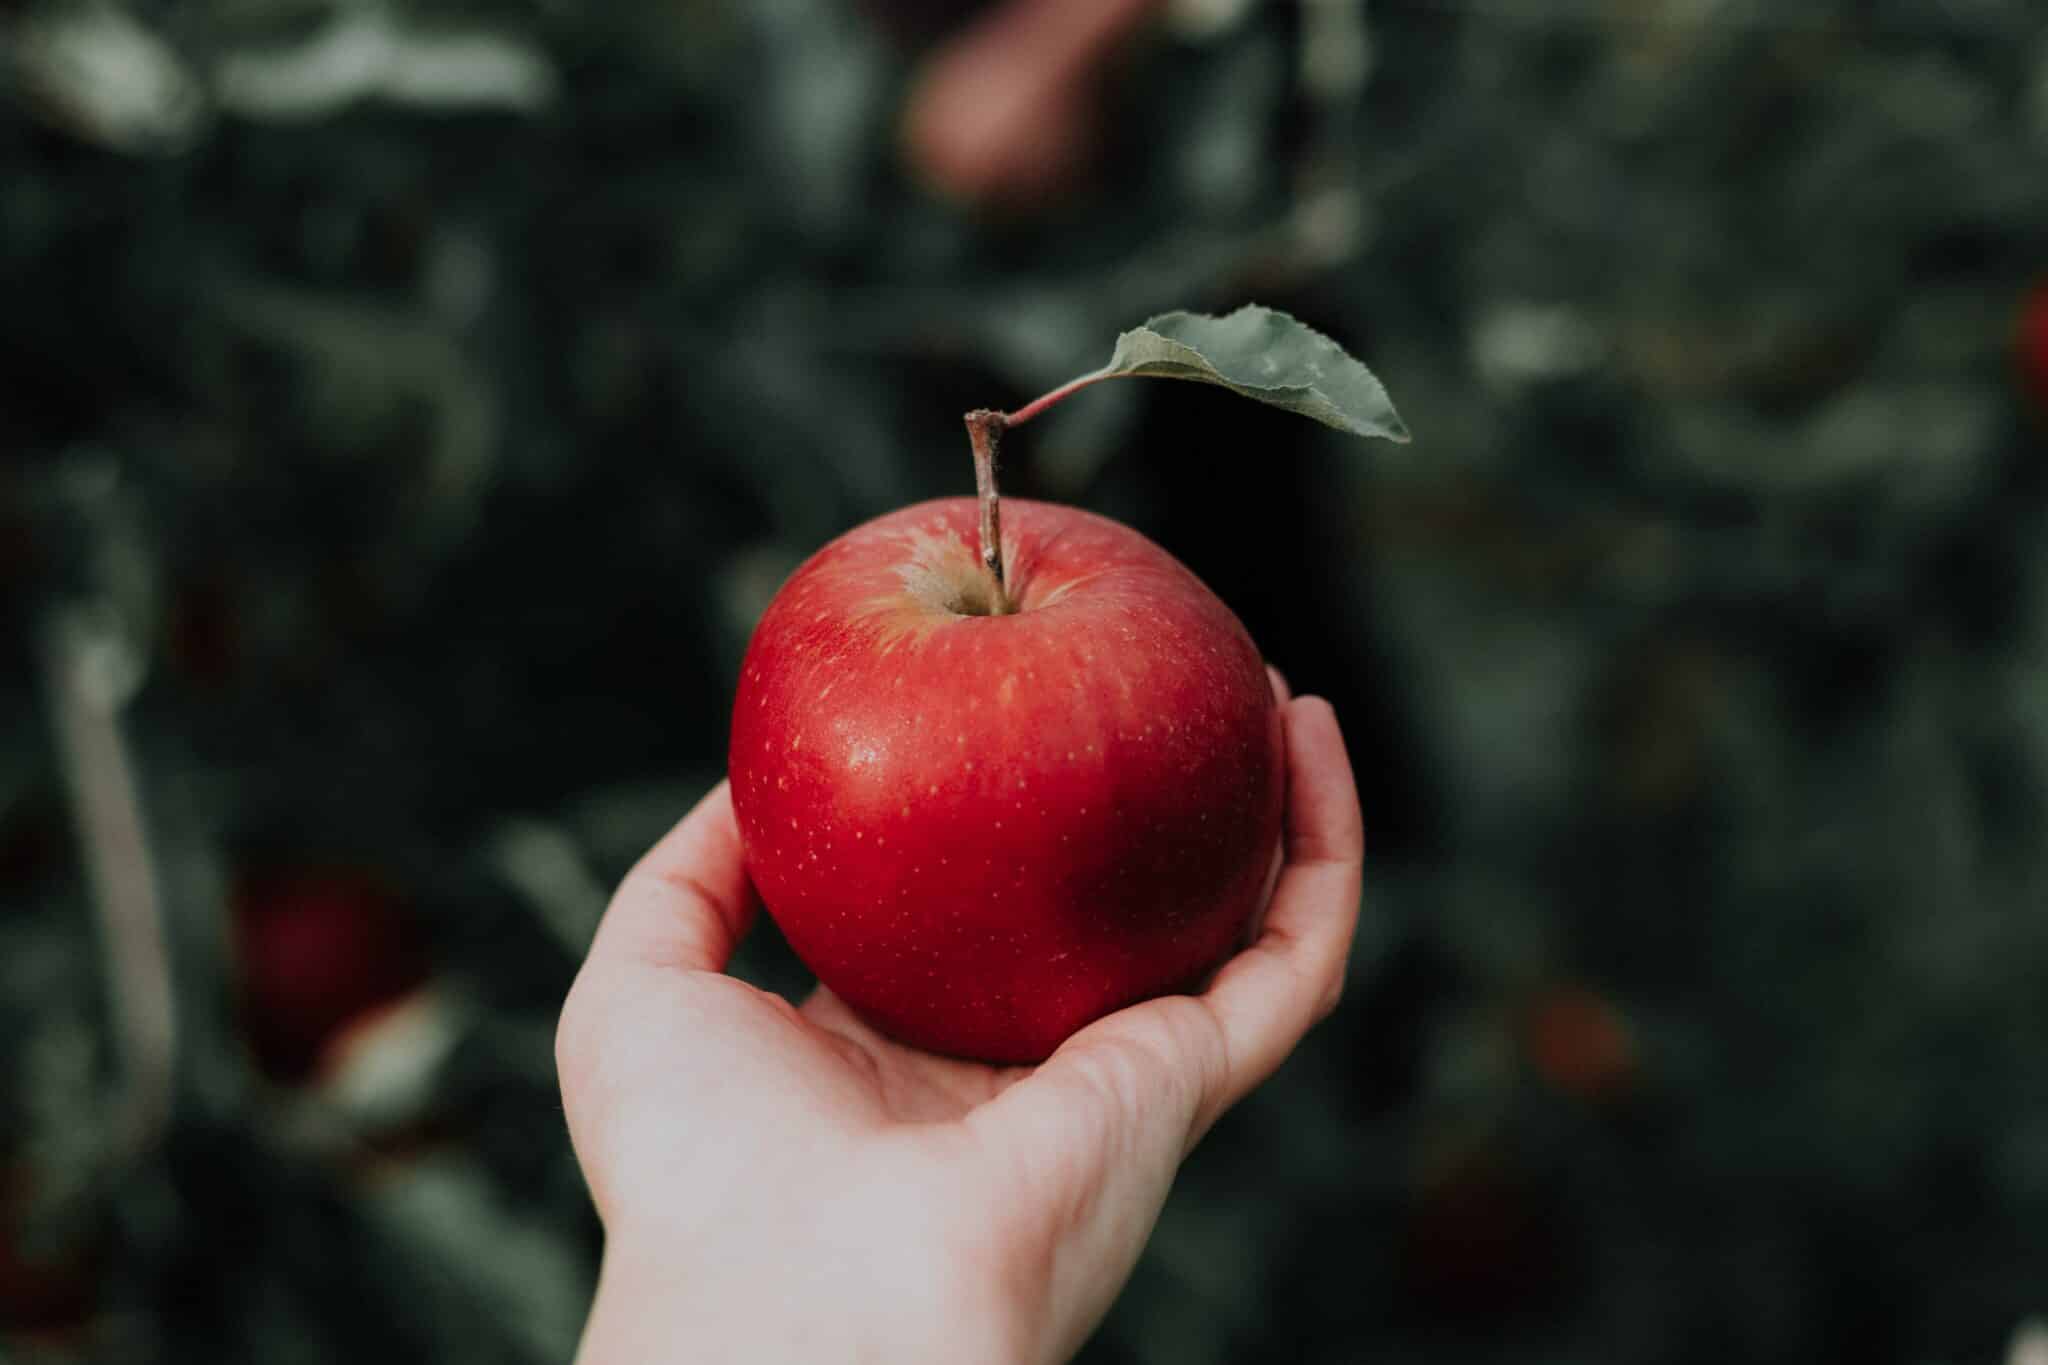 Holding an apple | Photo by Priscilla Du Preez on Unsplash